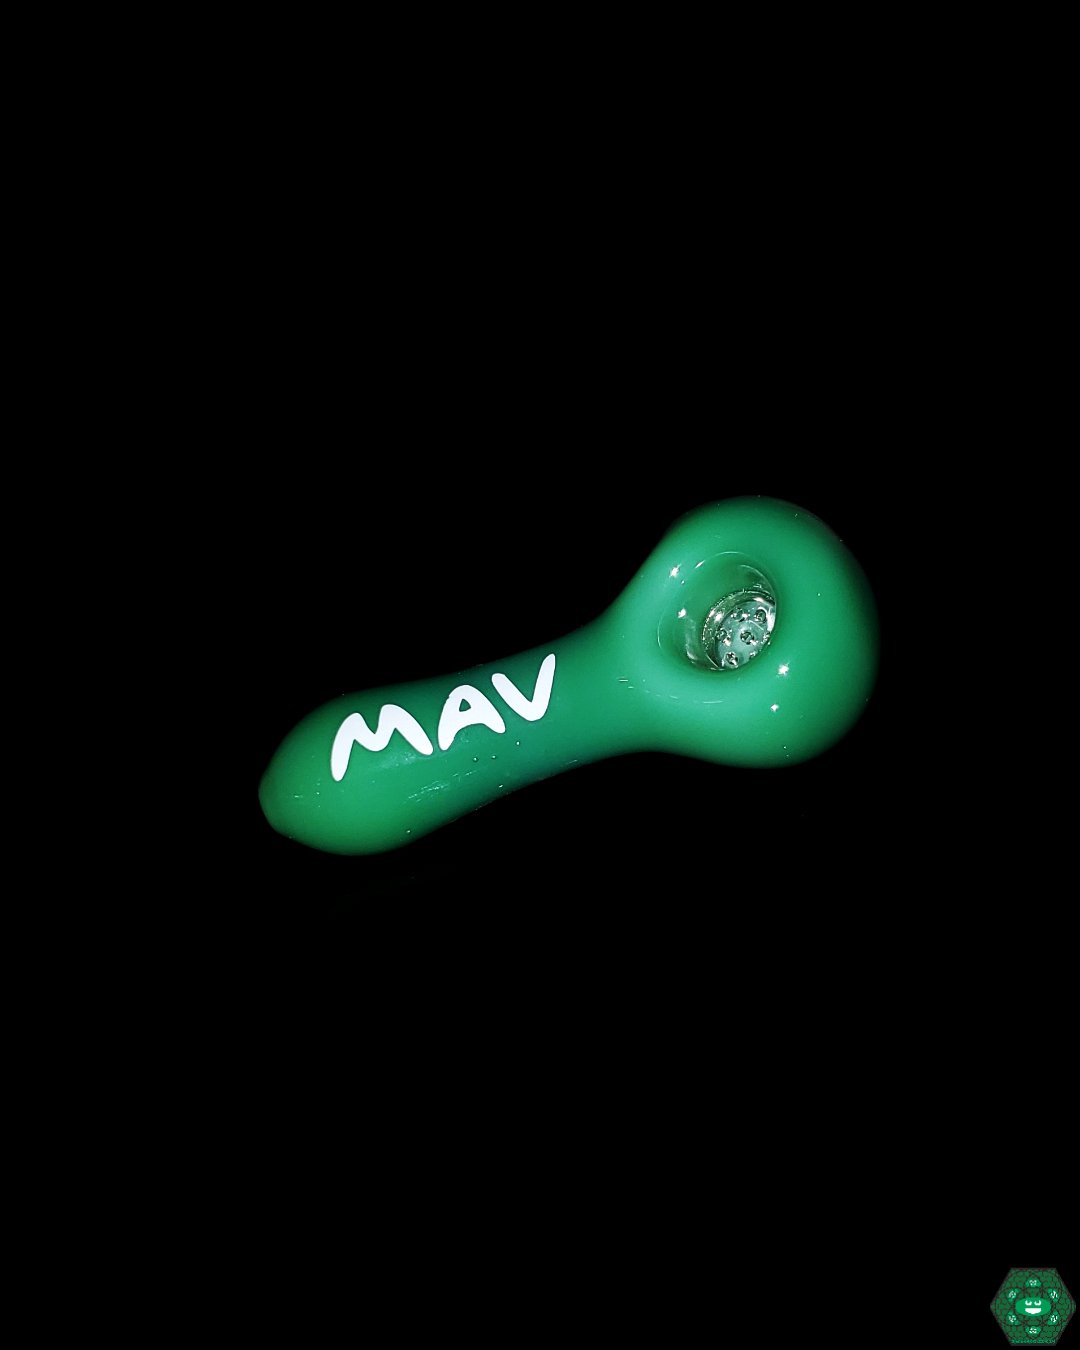 MAV Glass - Spoon w/ Screen - @Mavglass - HG